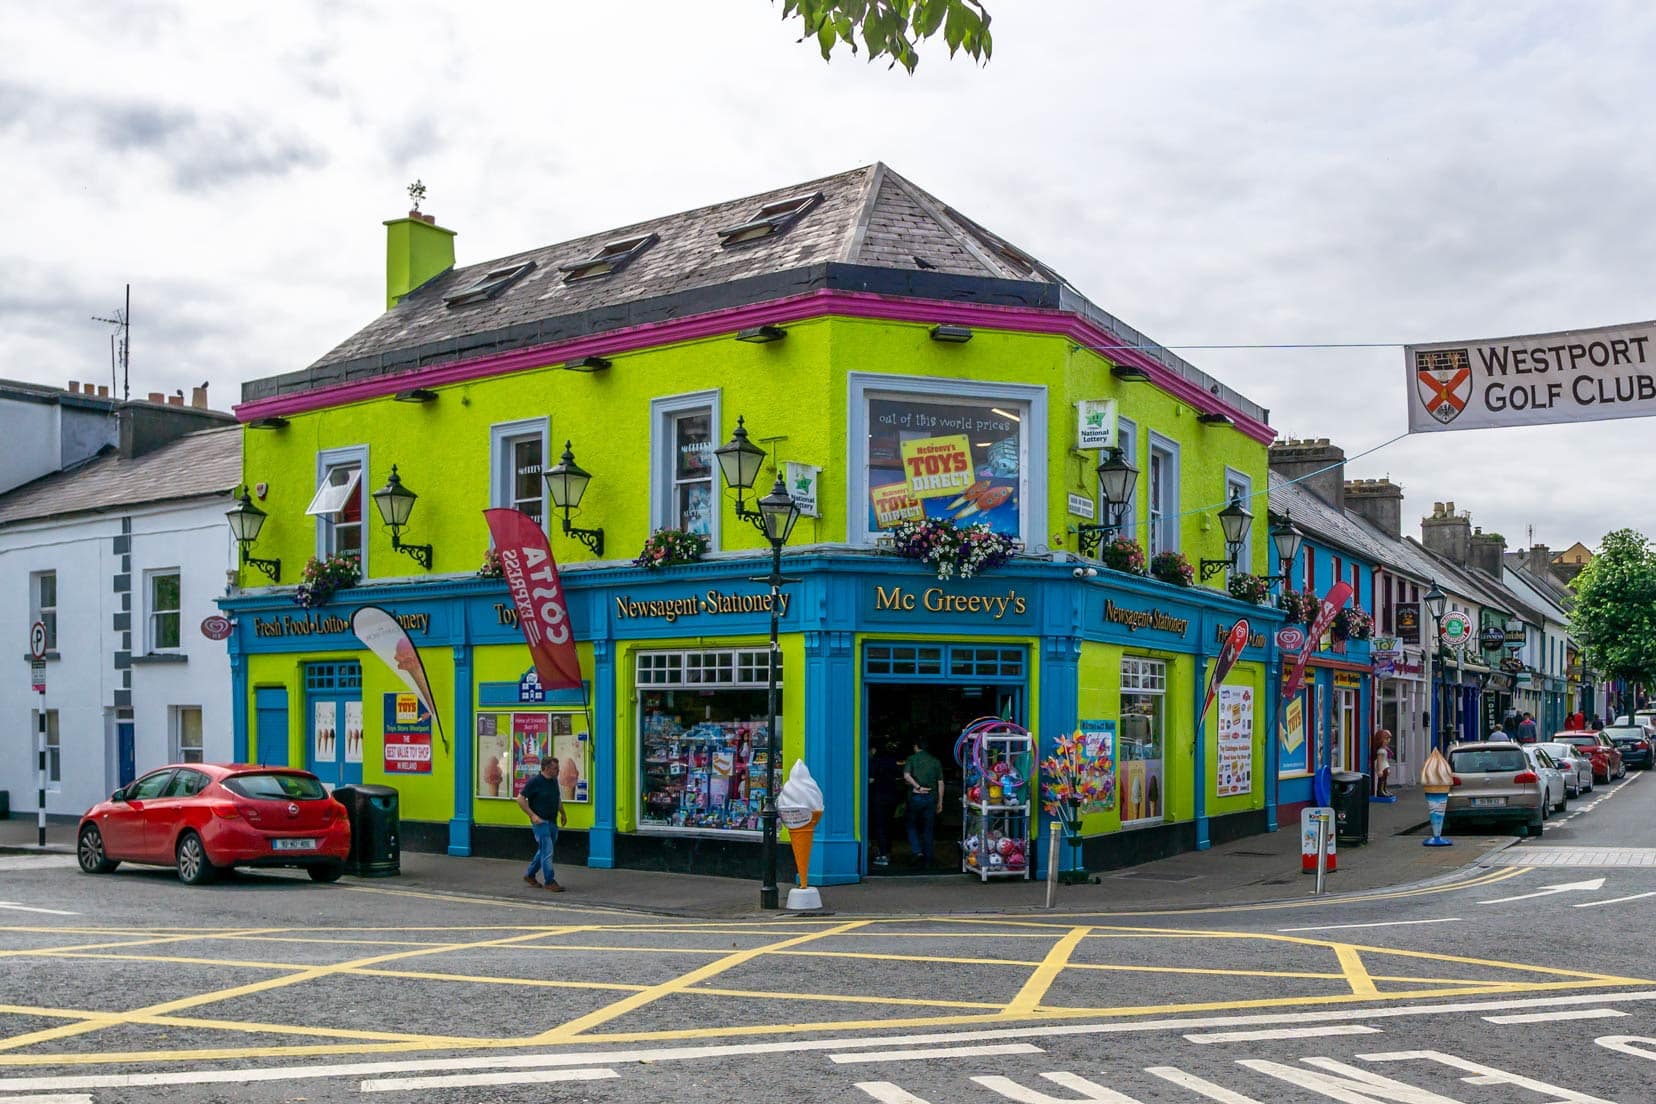 Mcgreeveys corner store - a bright green building